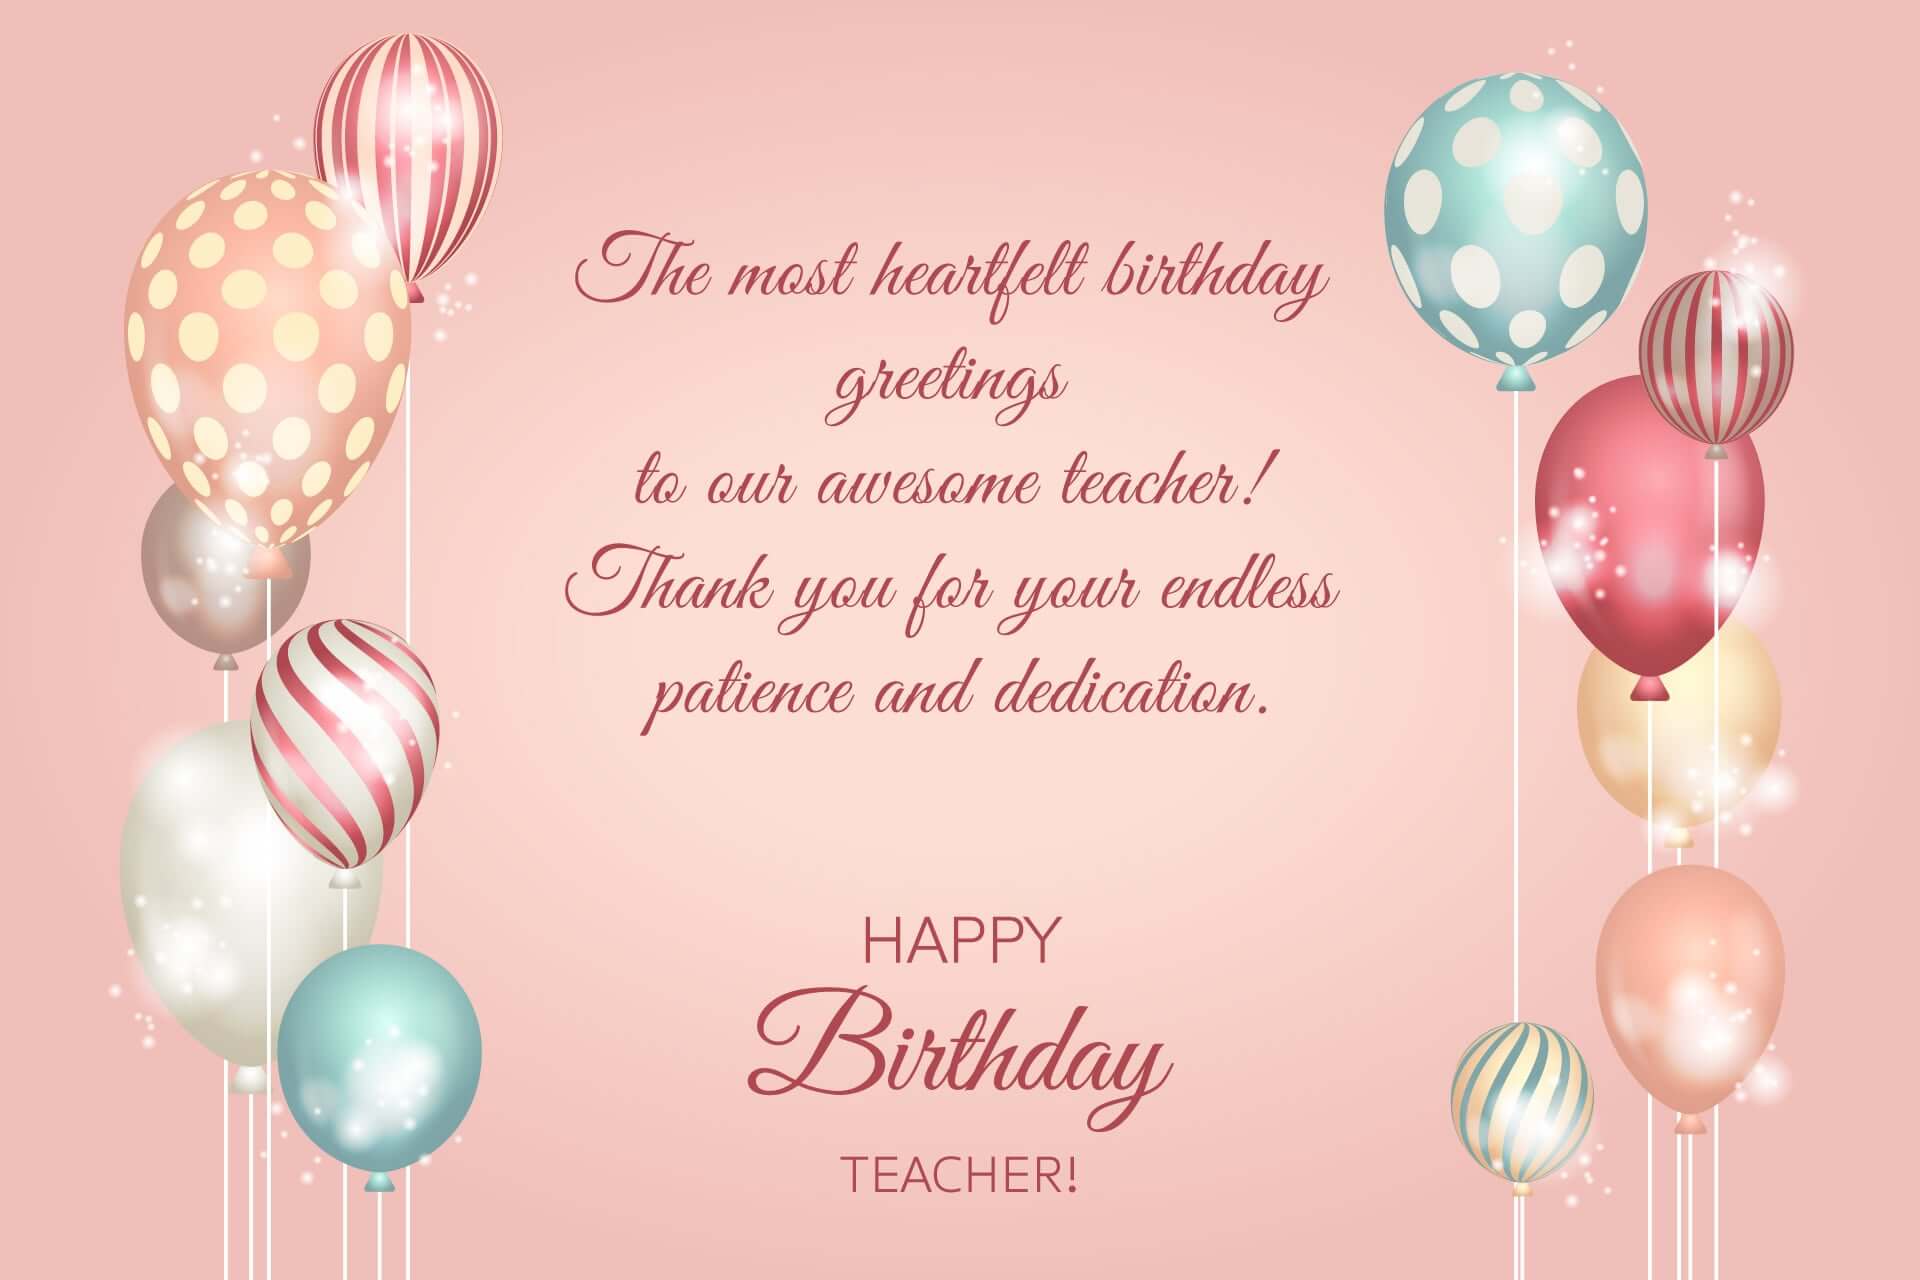 Happy Birthday Wishes for Teacher. Best Birthday Wishes 2020